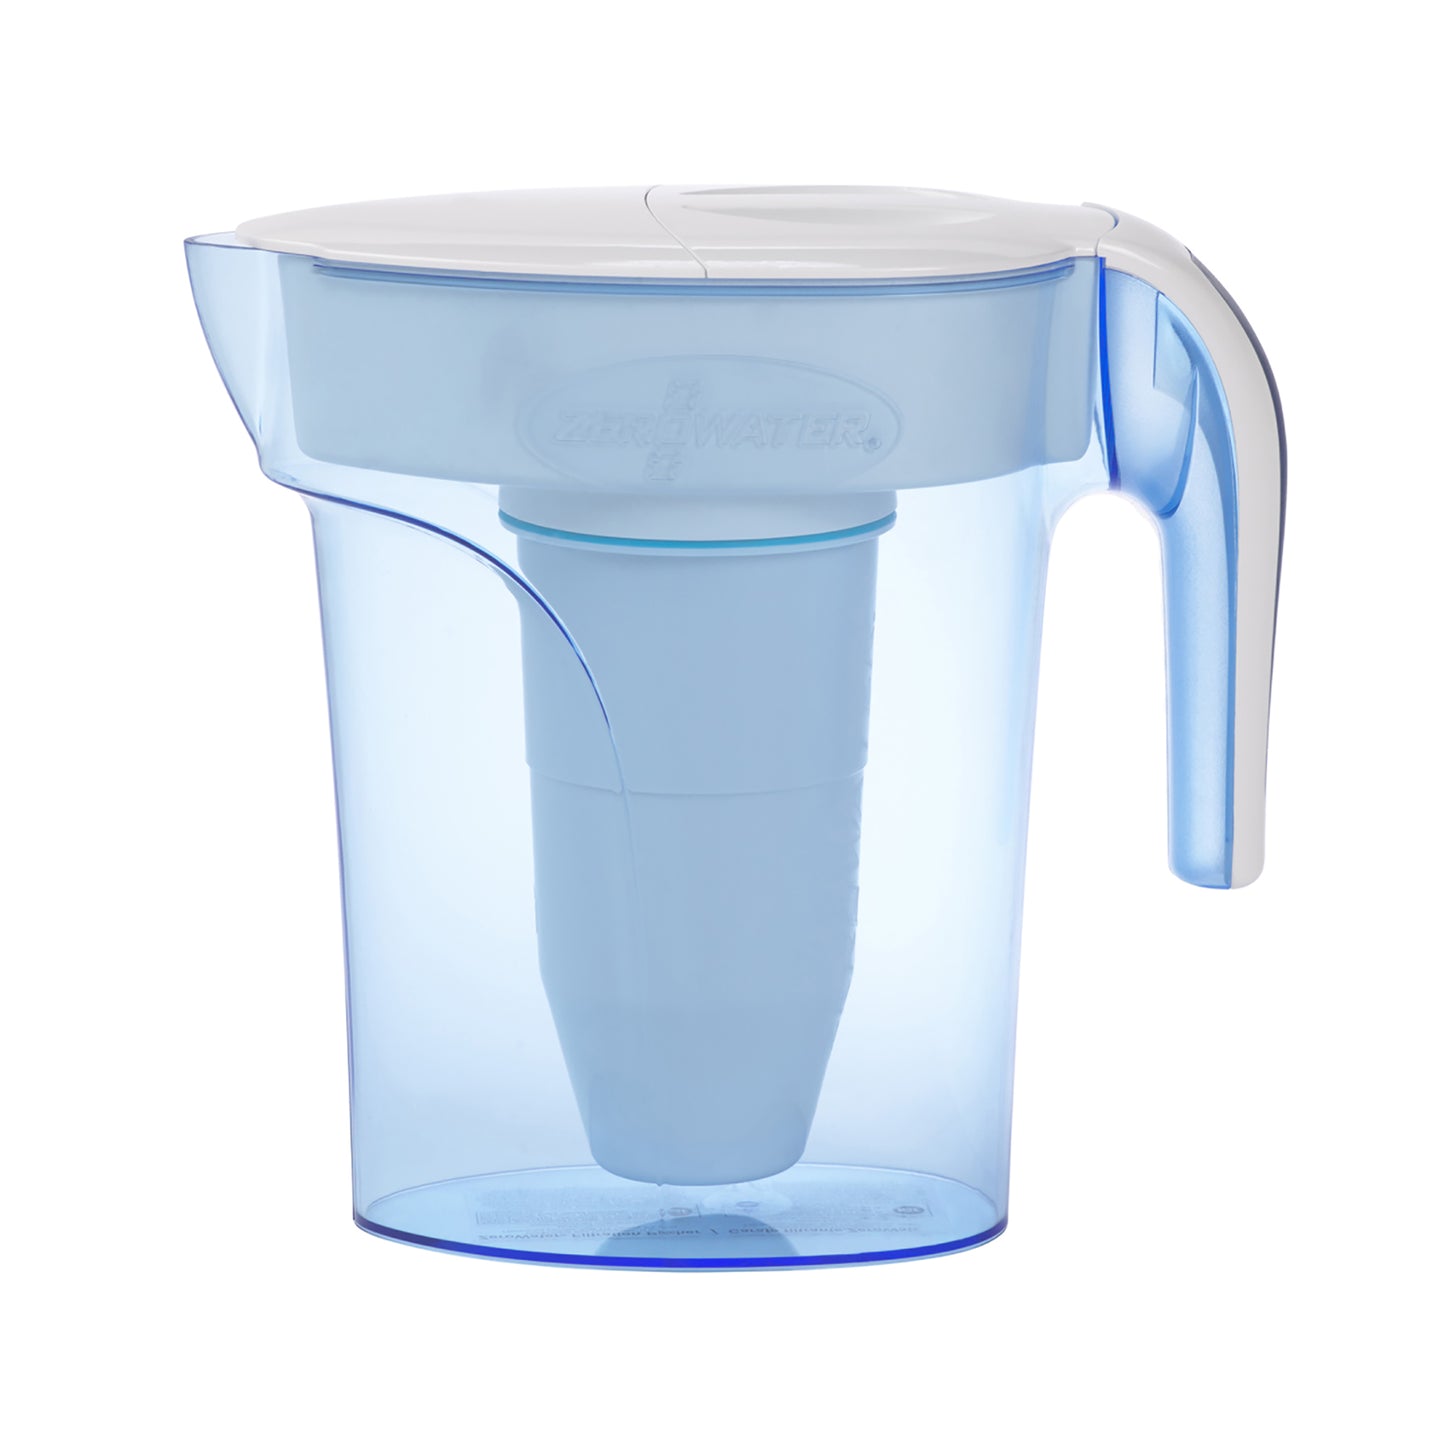 Combi-box: 1,4 liter waterkan incl. 2 filters | Combibox 6 kops karaf ( 1,4 liter) + 1 filter